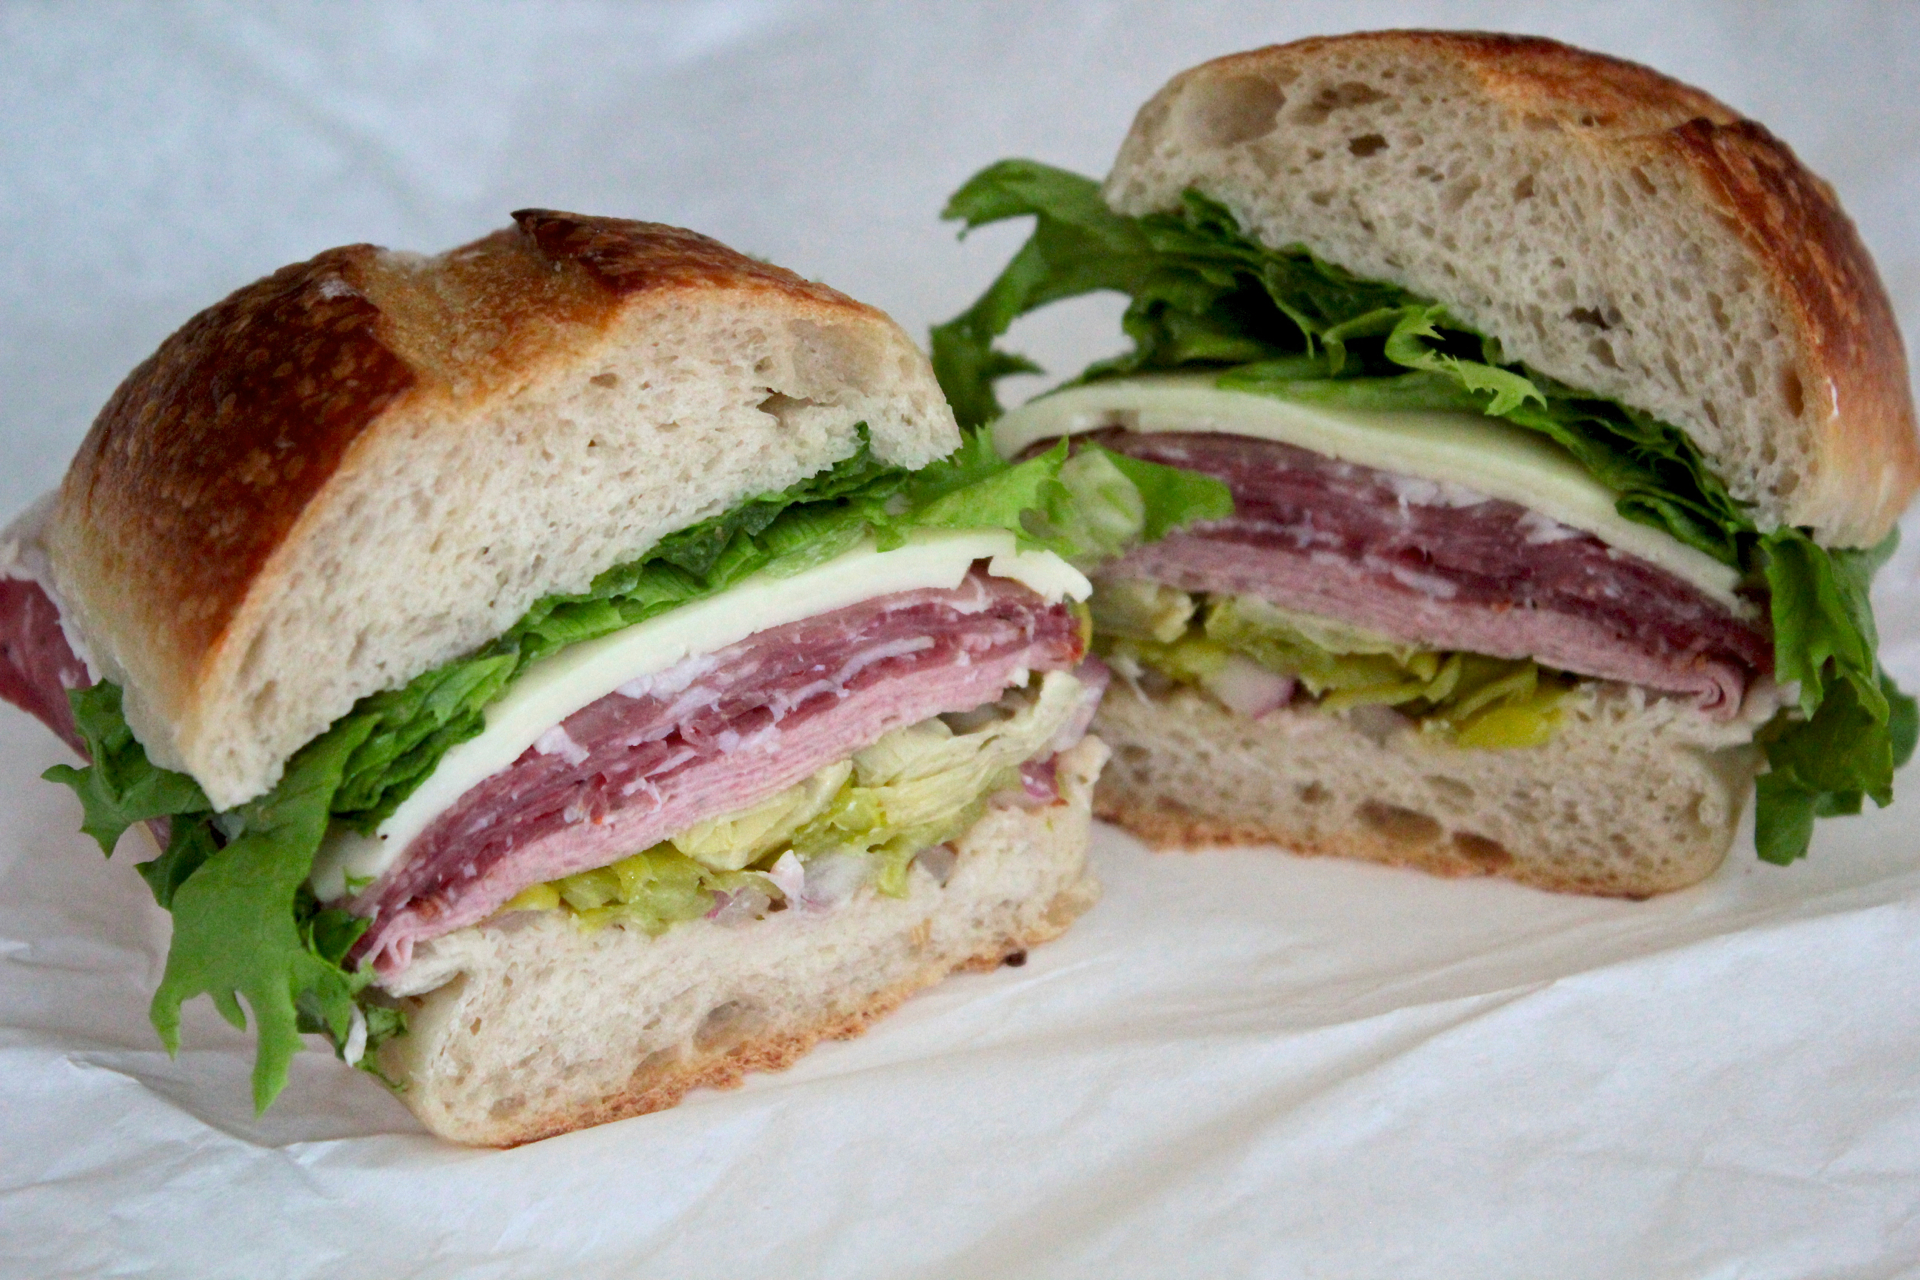 The Godfather sandwich features salami, coppa, prosciutto, mortadella, artichoke hearts and pepperoncinis.